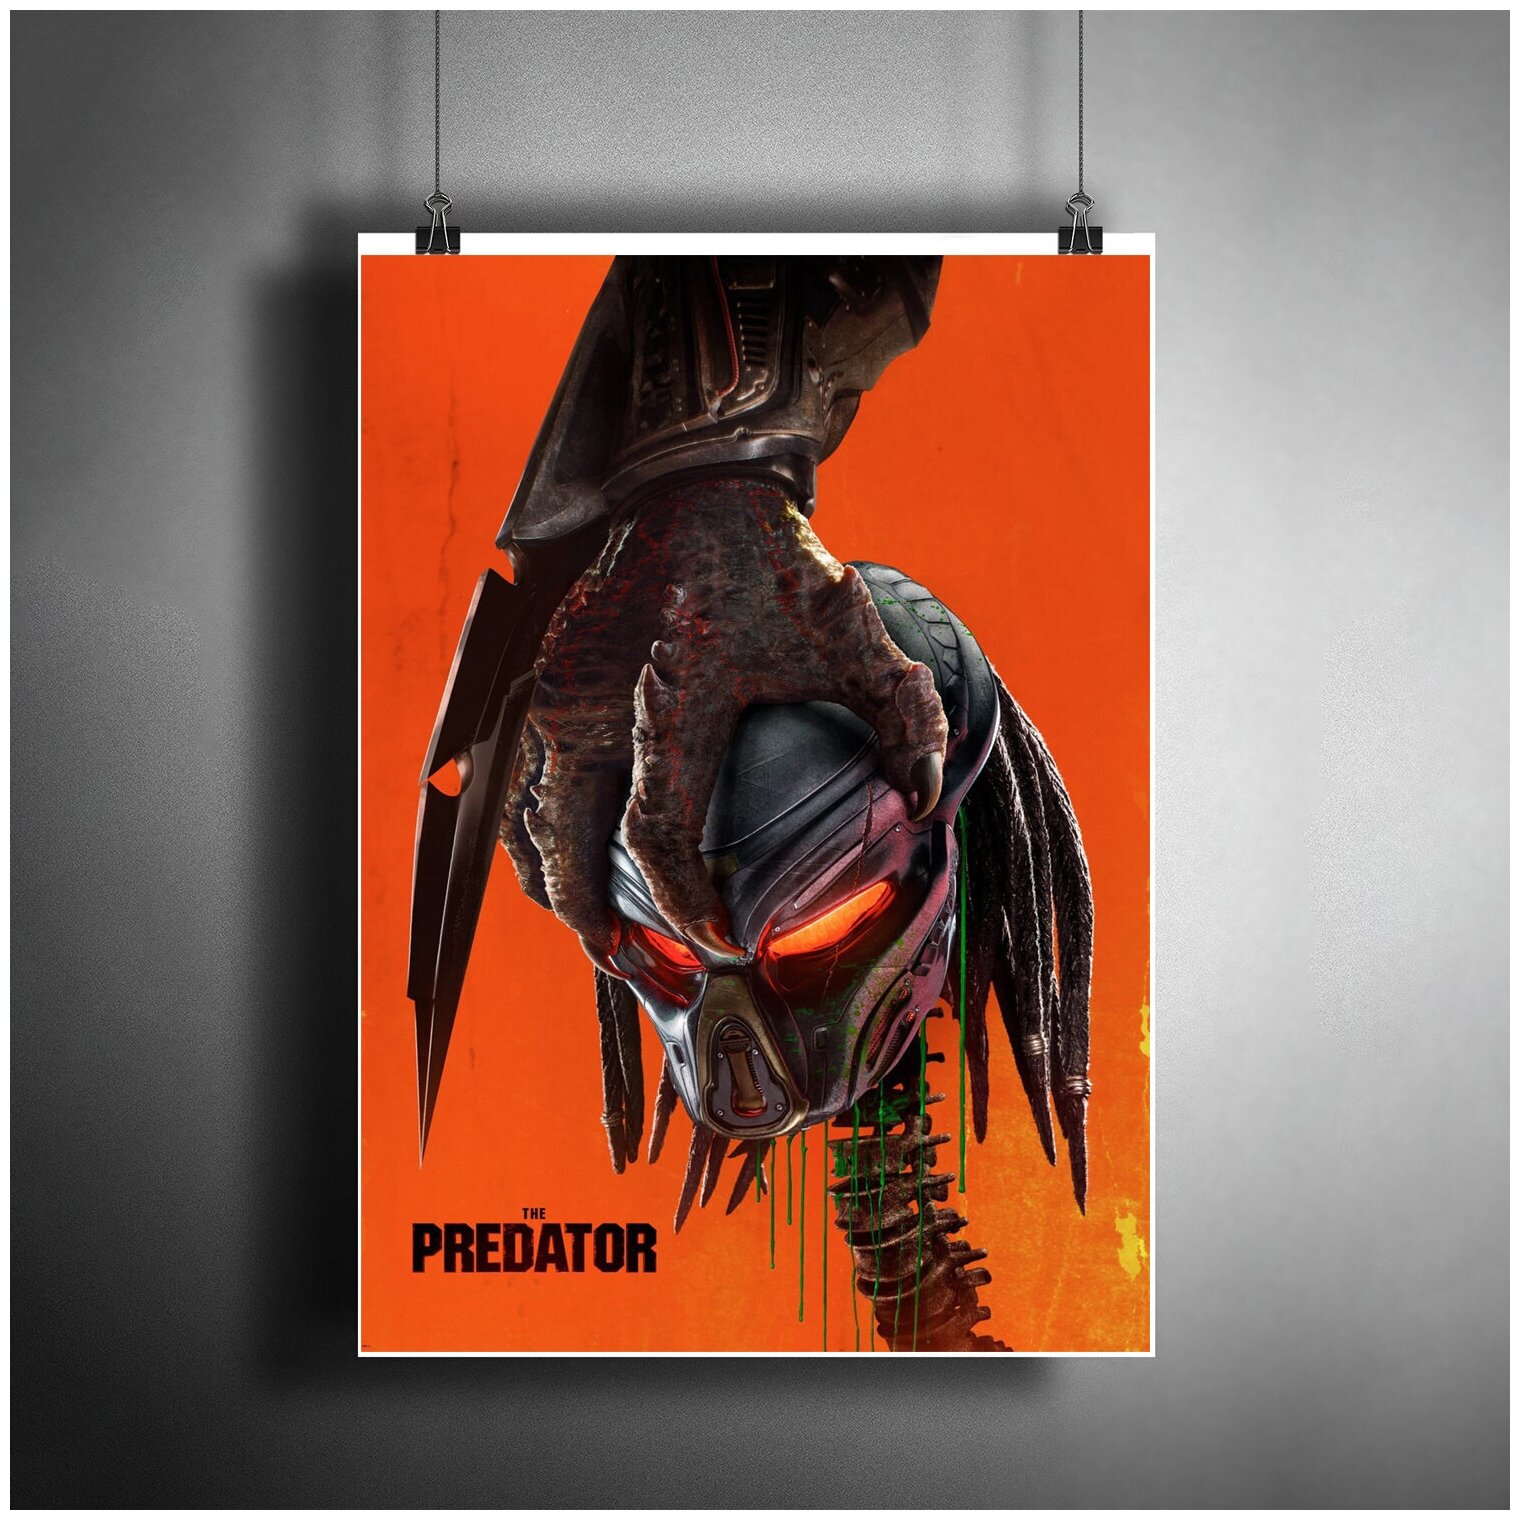 Постер плакат для интерьера "Фильм: Хищник. The Predator"/ Декор дома, офиса, комнаты A3 (297 x 420 мм)